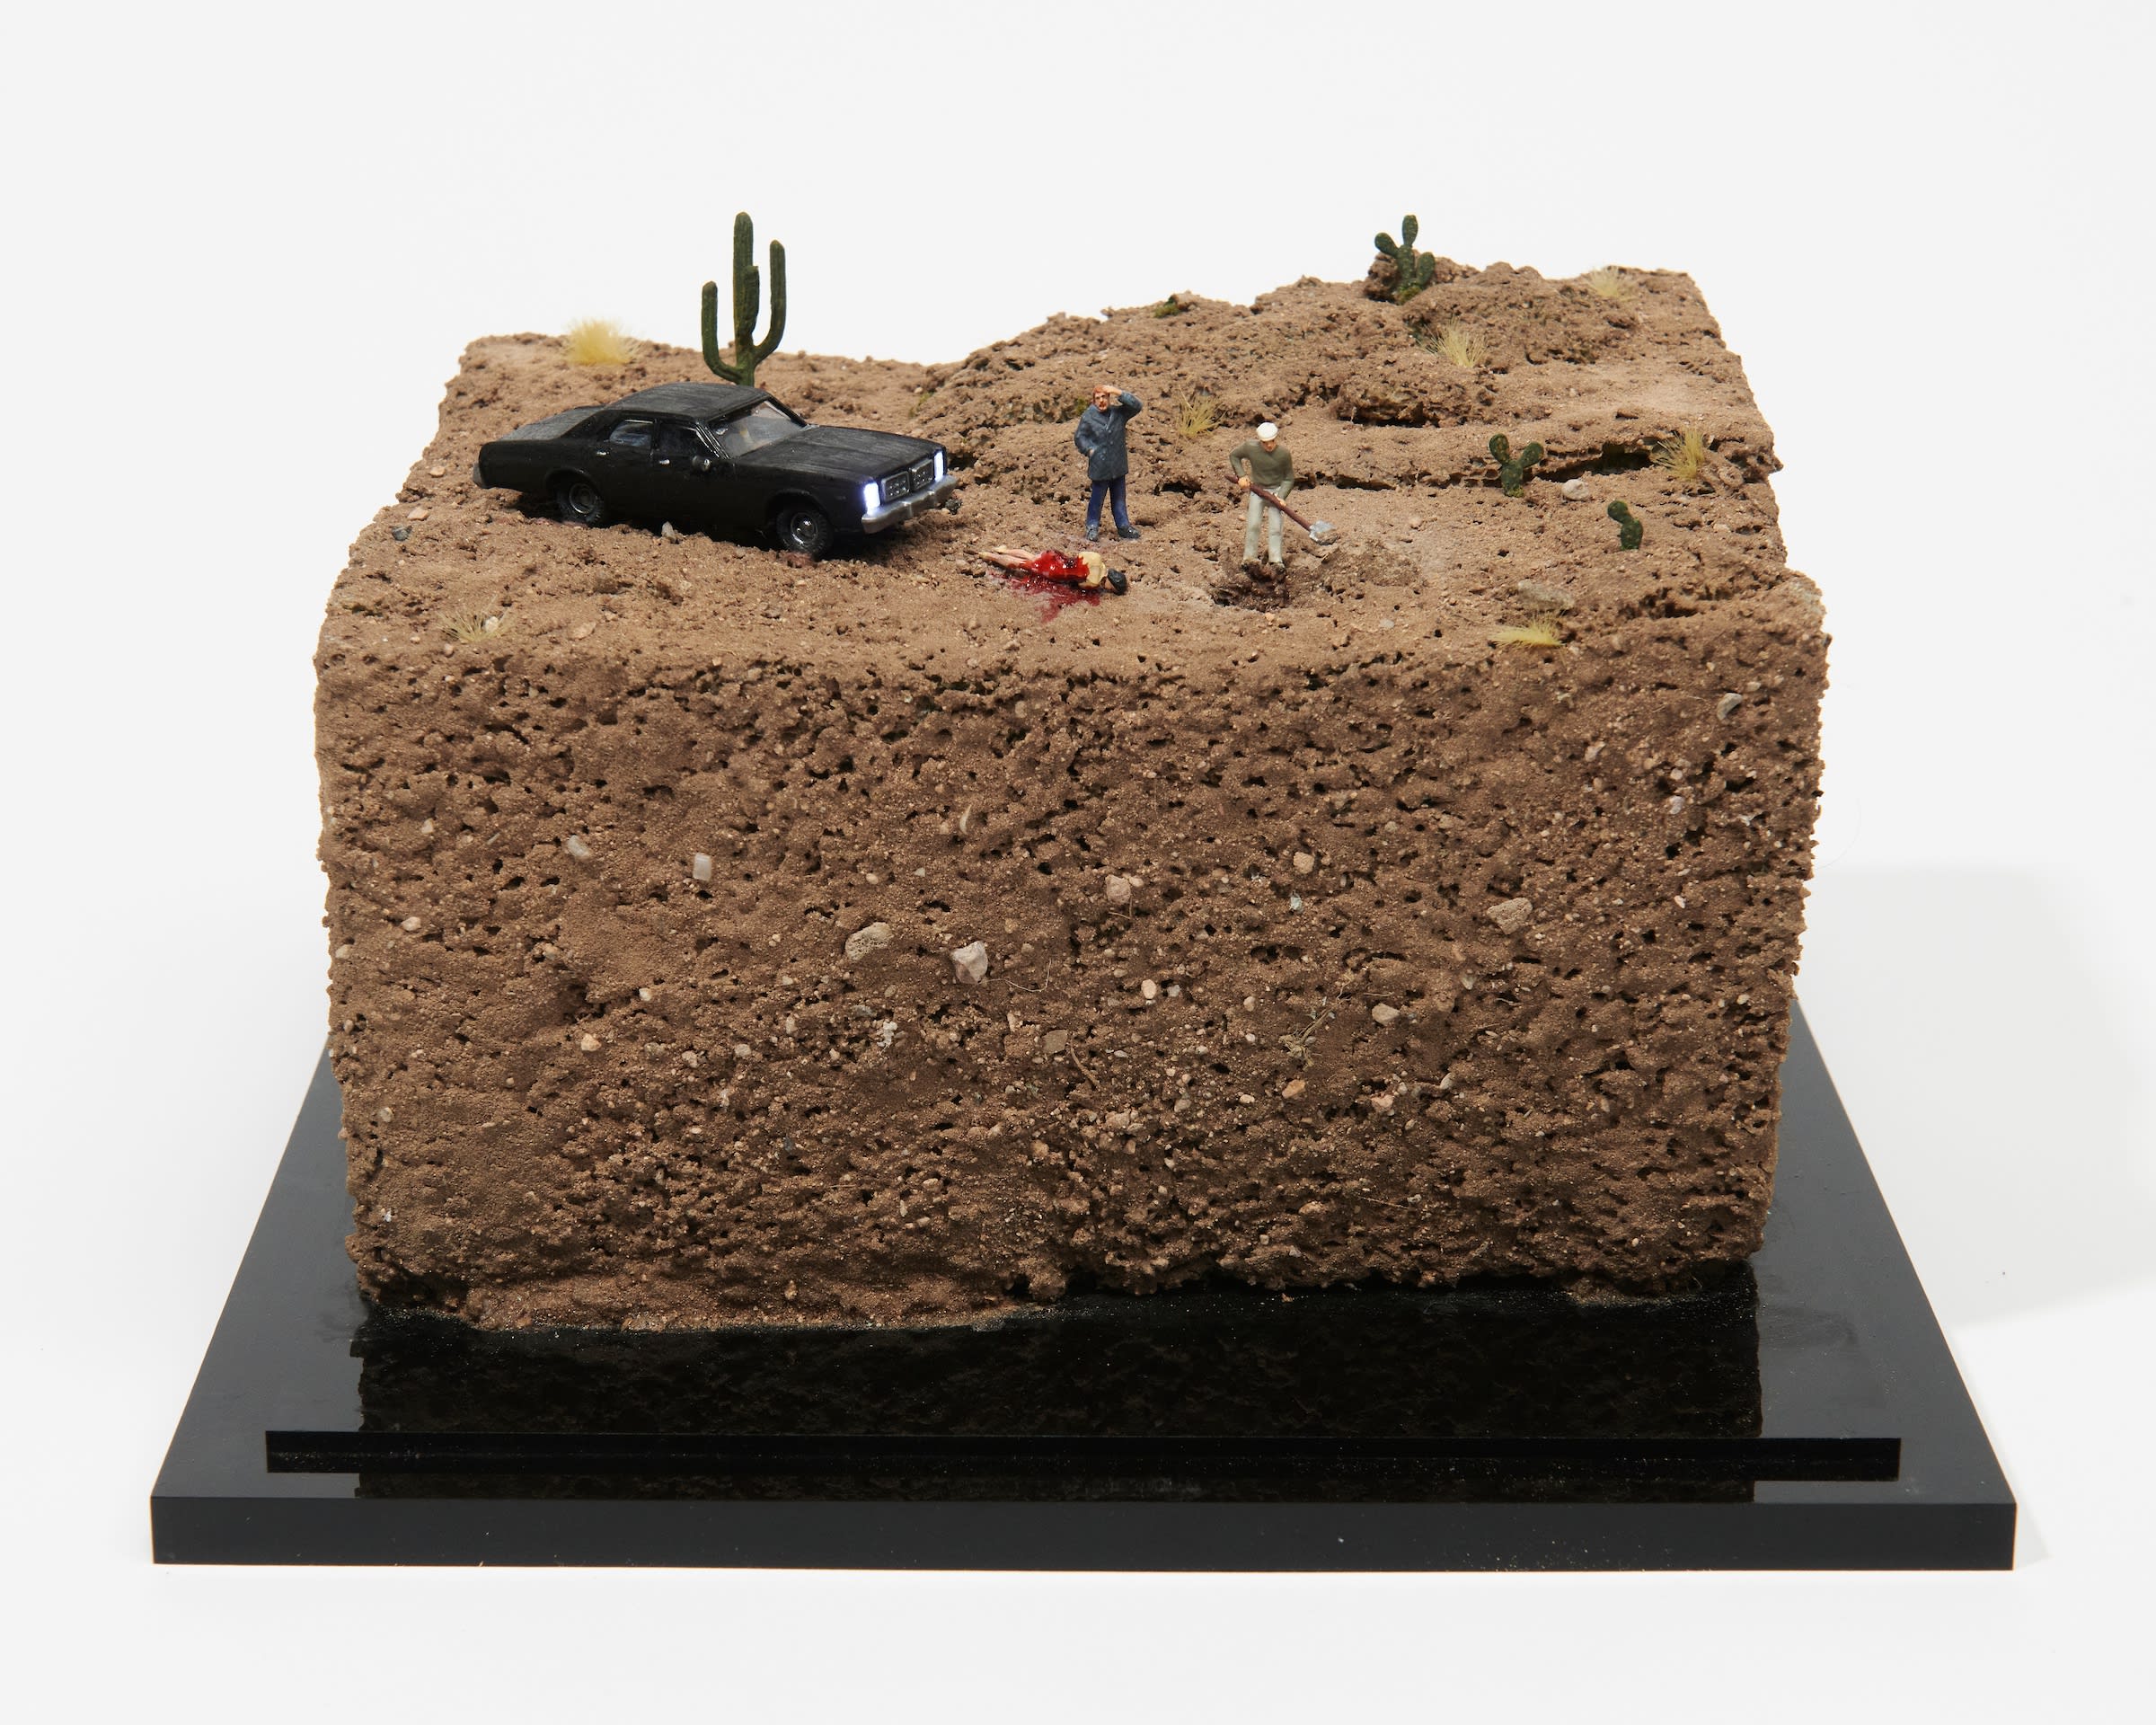 Abigail Goldman's sculpture of a desert murder scene